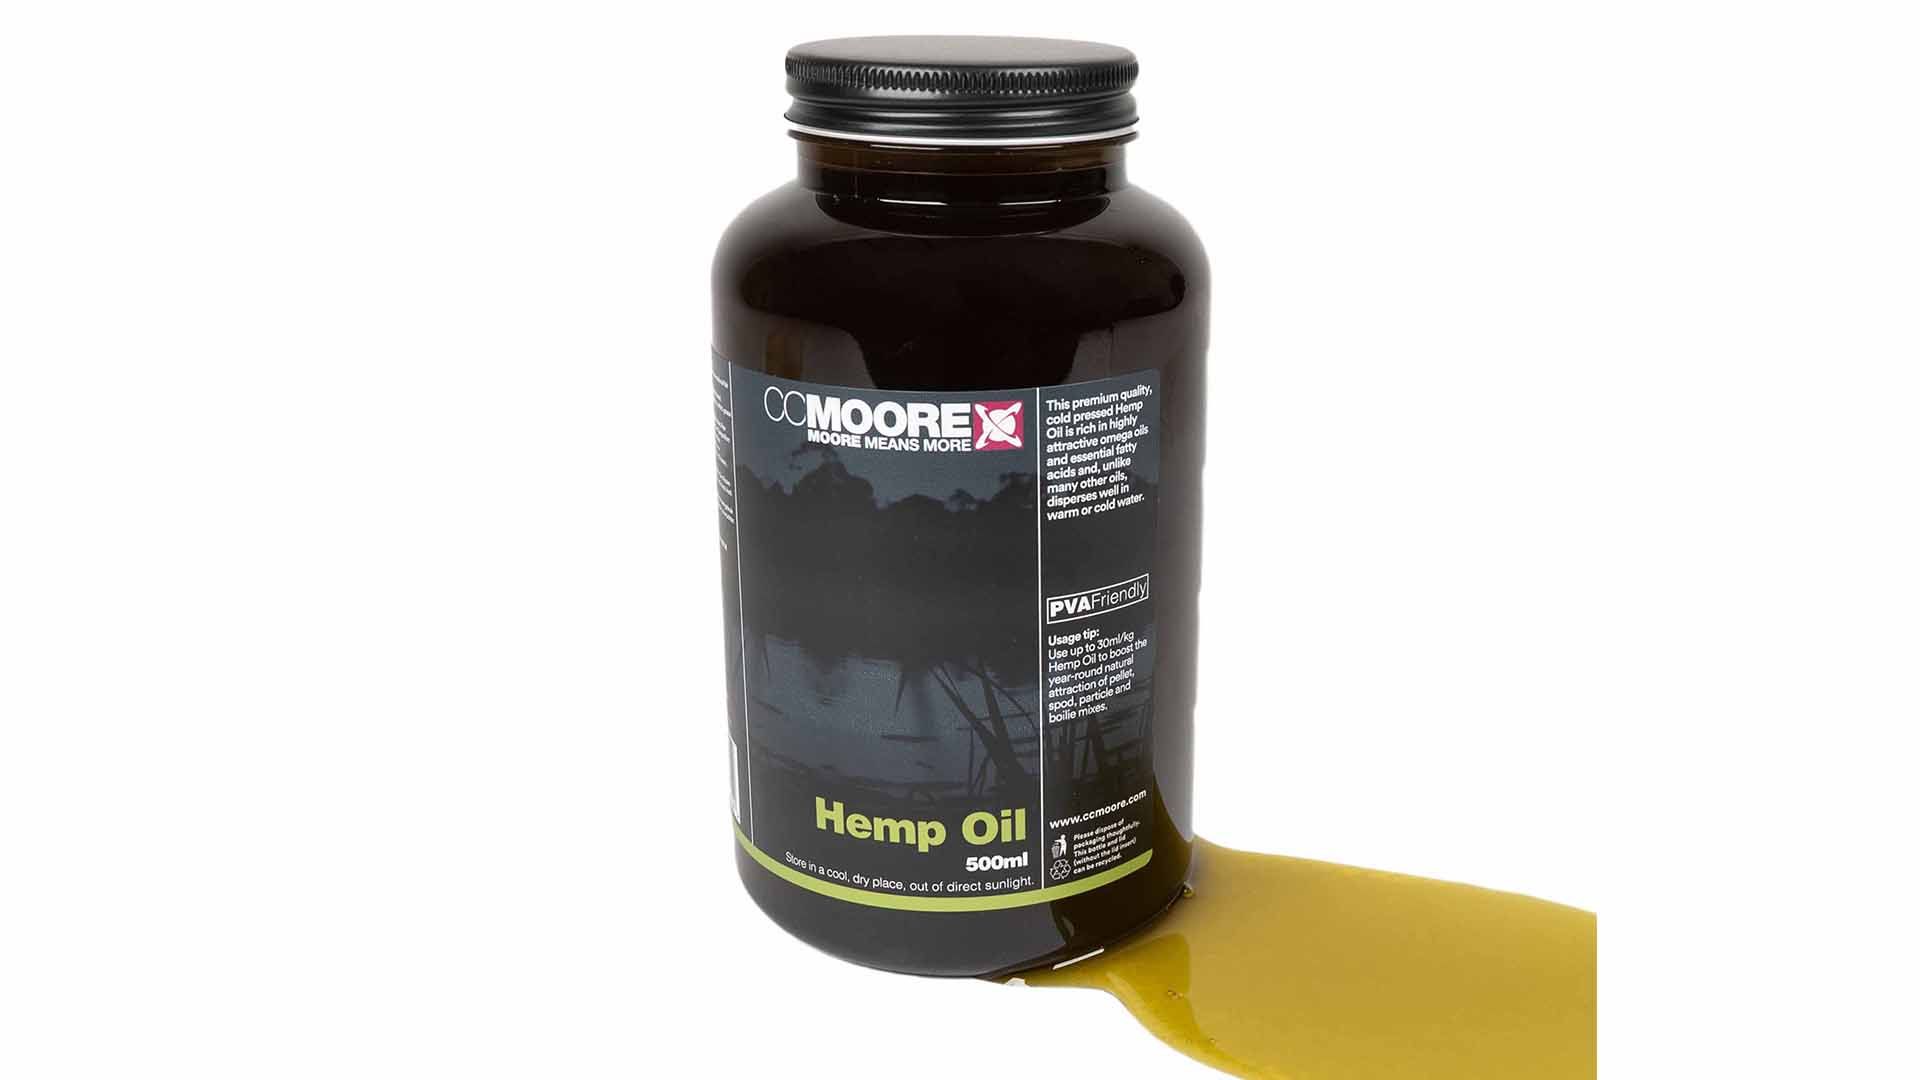 CC Moore oleje 500ml - Hemp oil